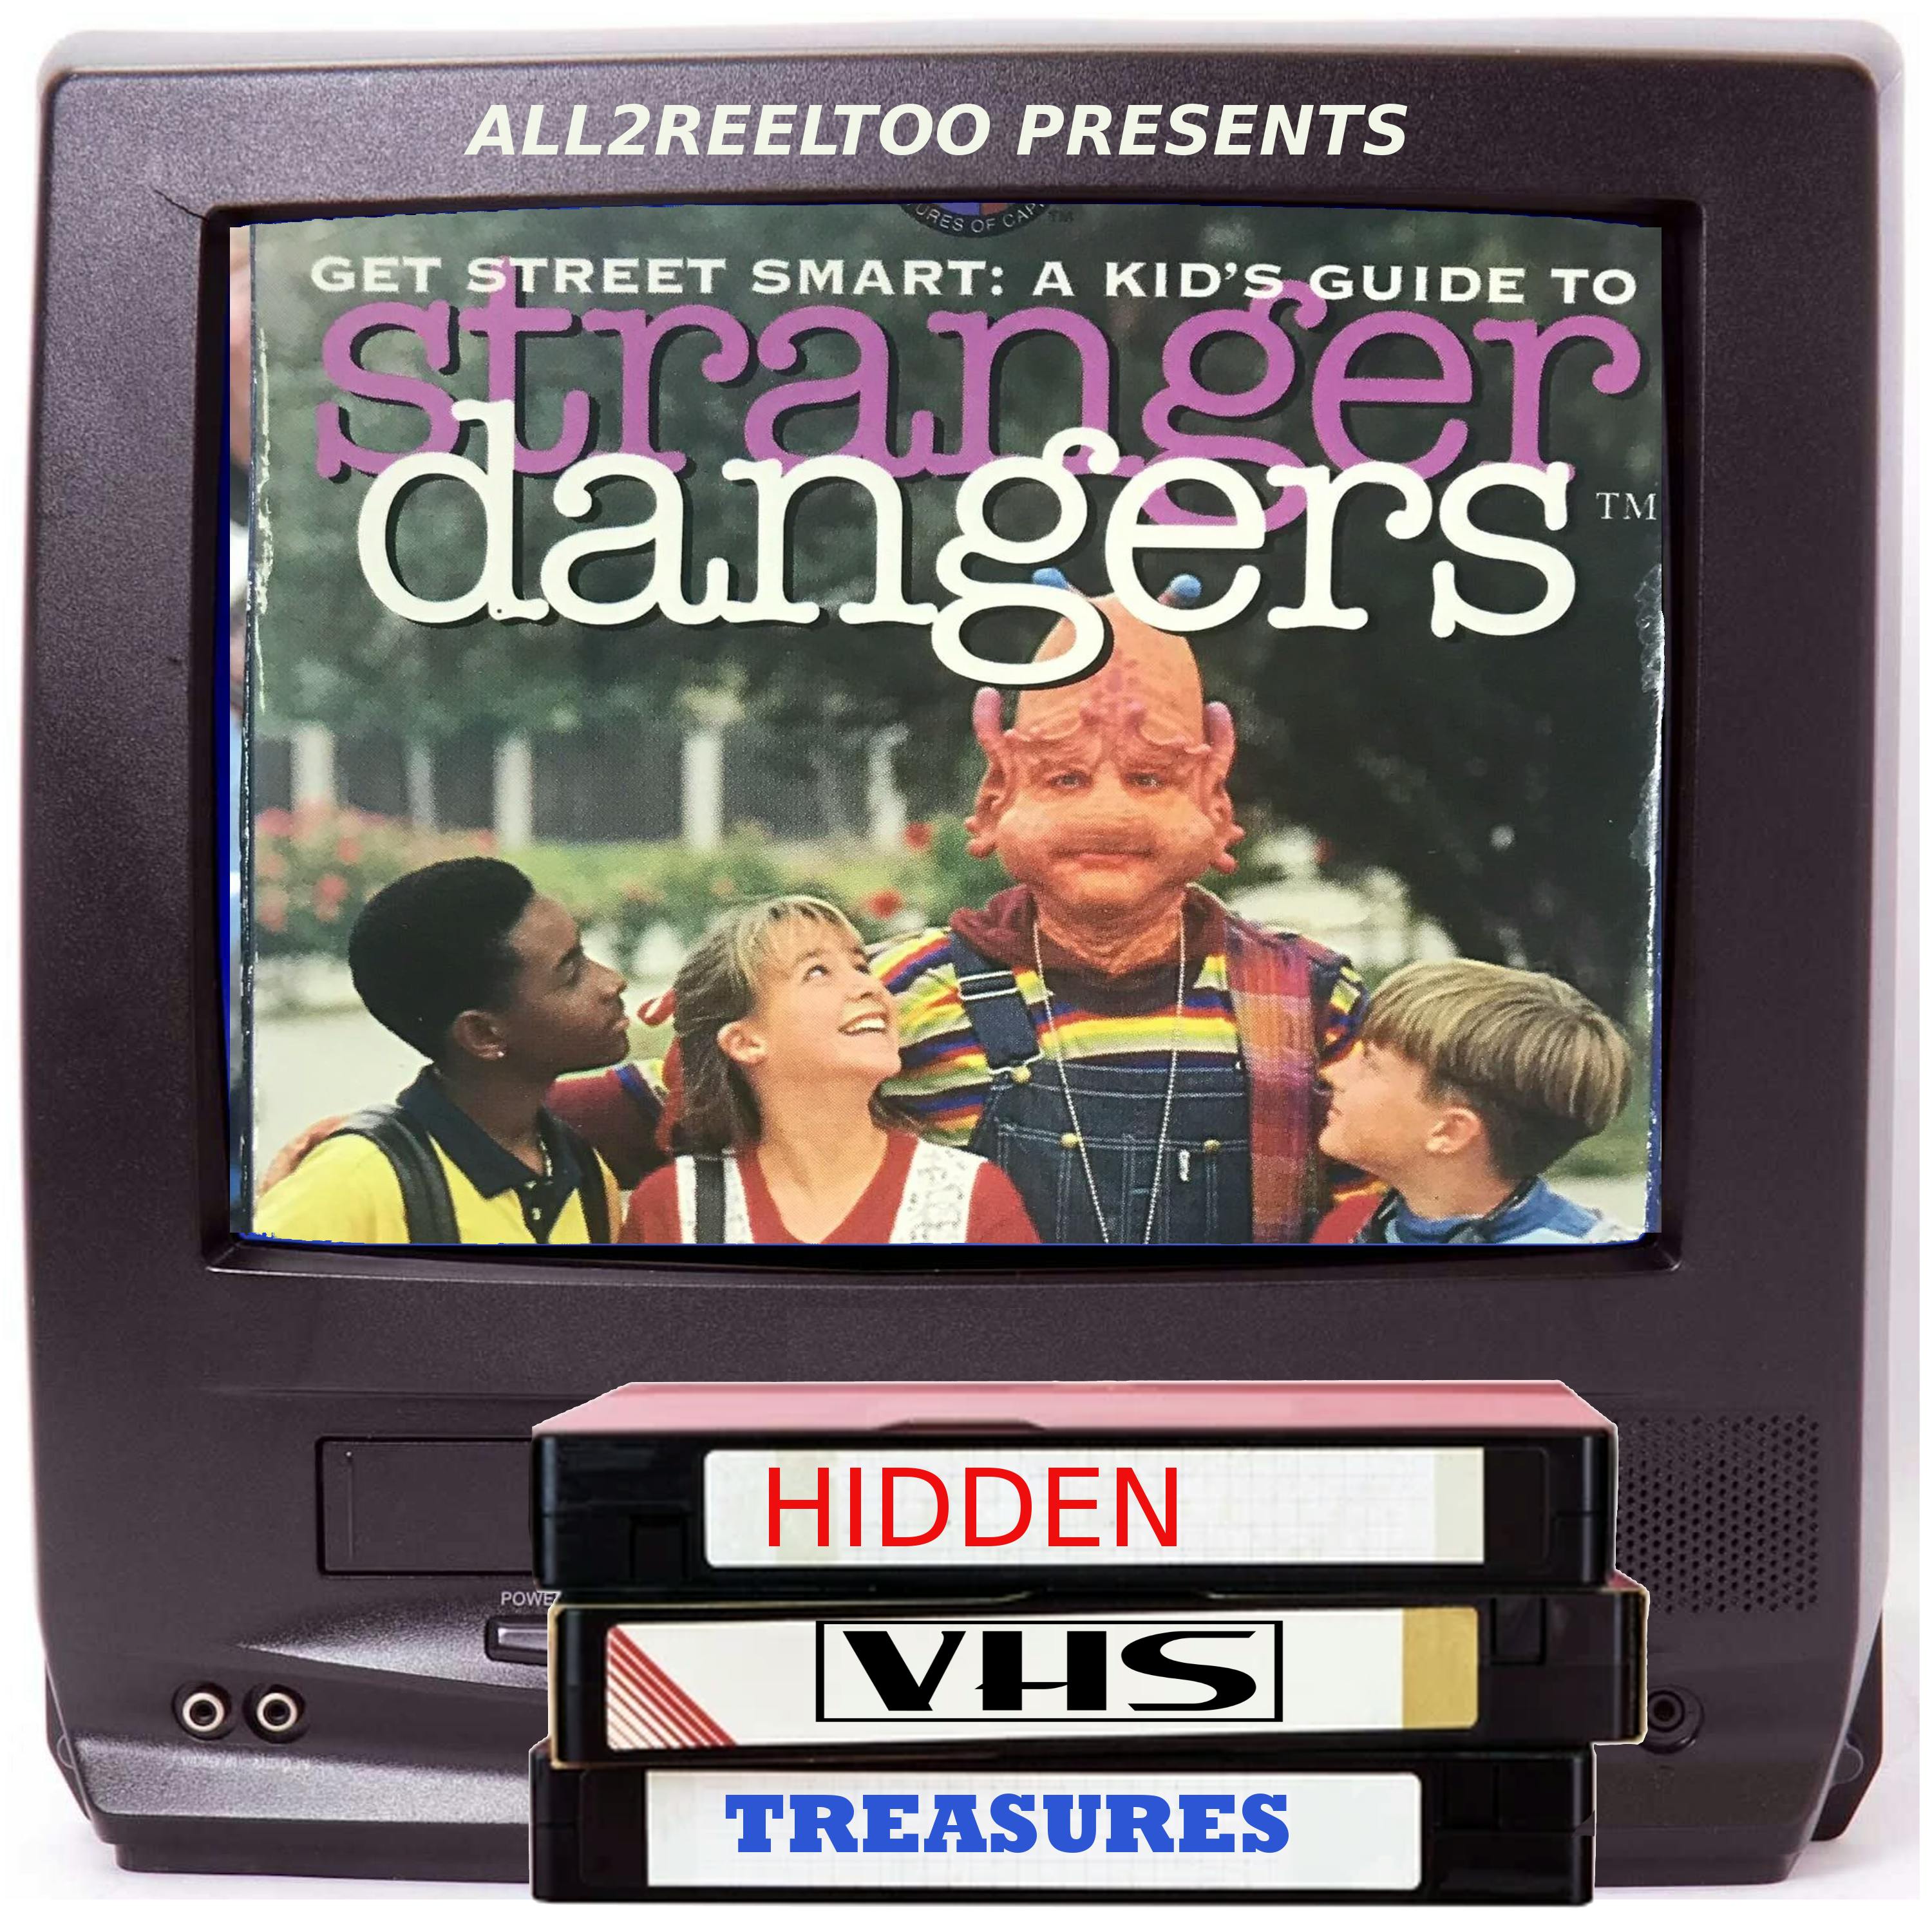 Get Street Smart: A Kid's Guide To Stranger Dangers (1995) - HIDDEN VHS TREASURES